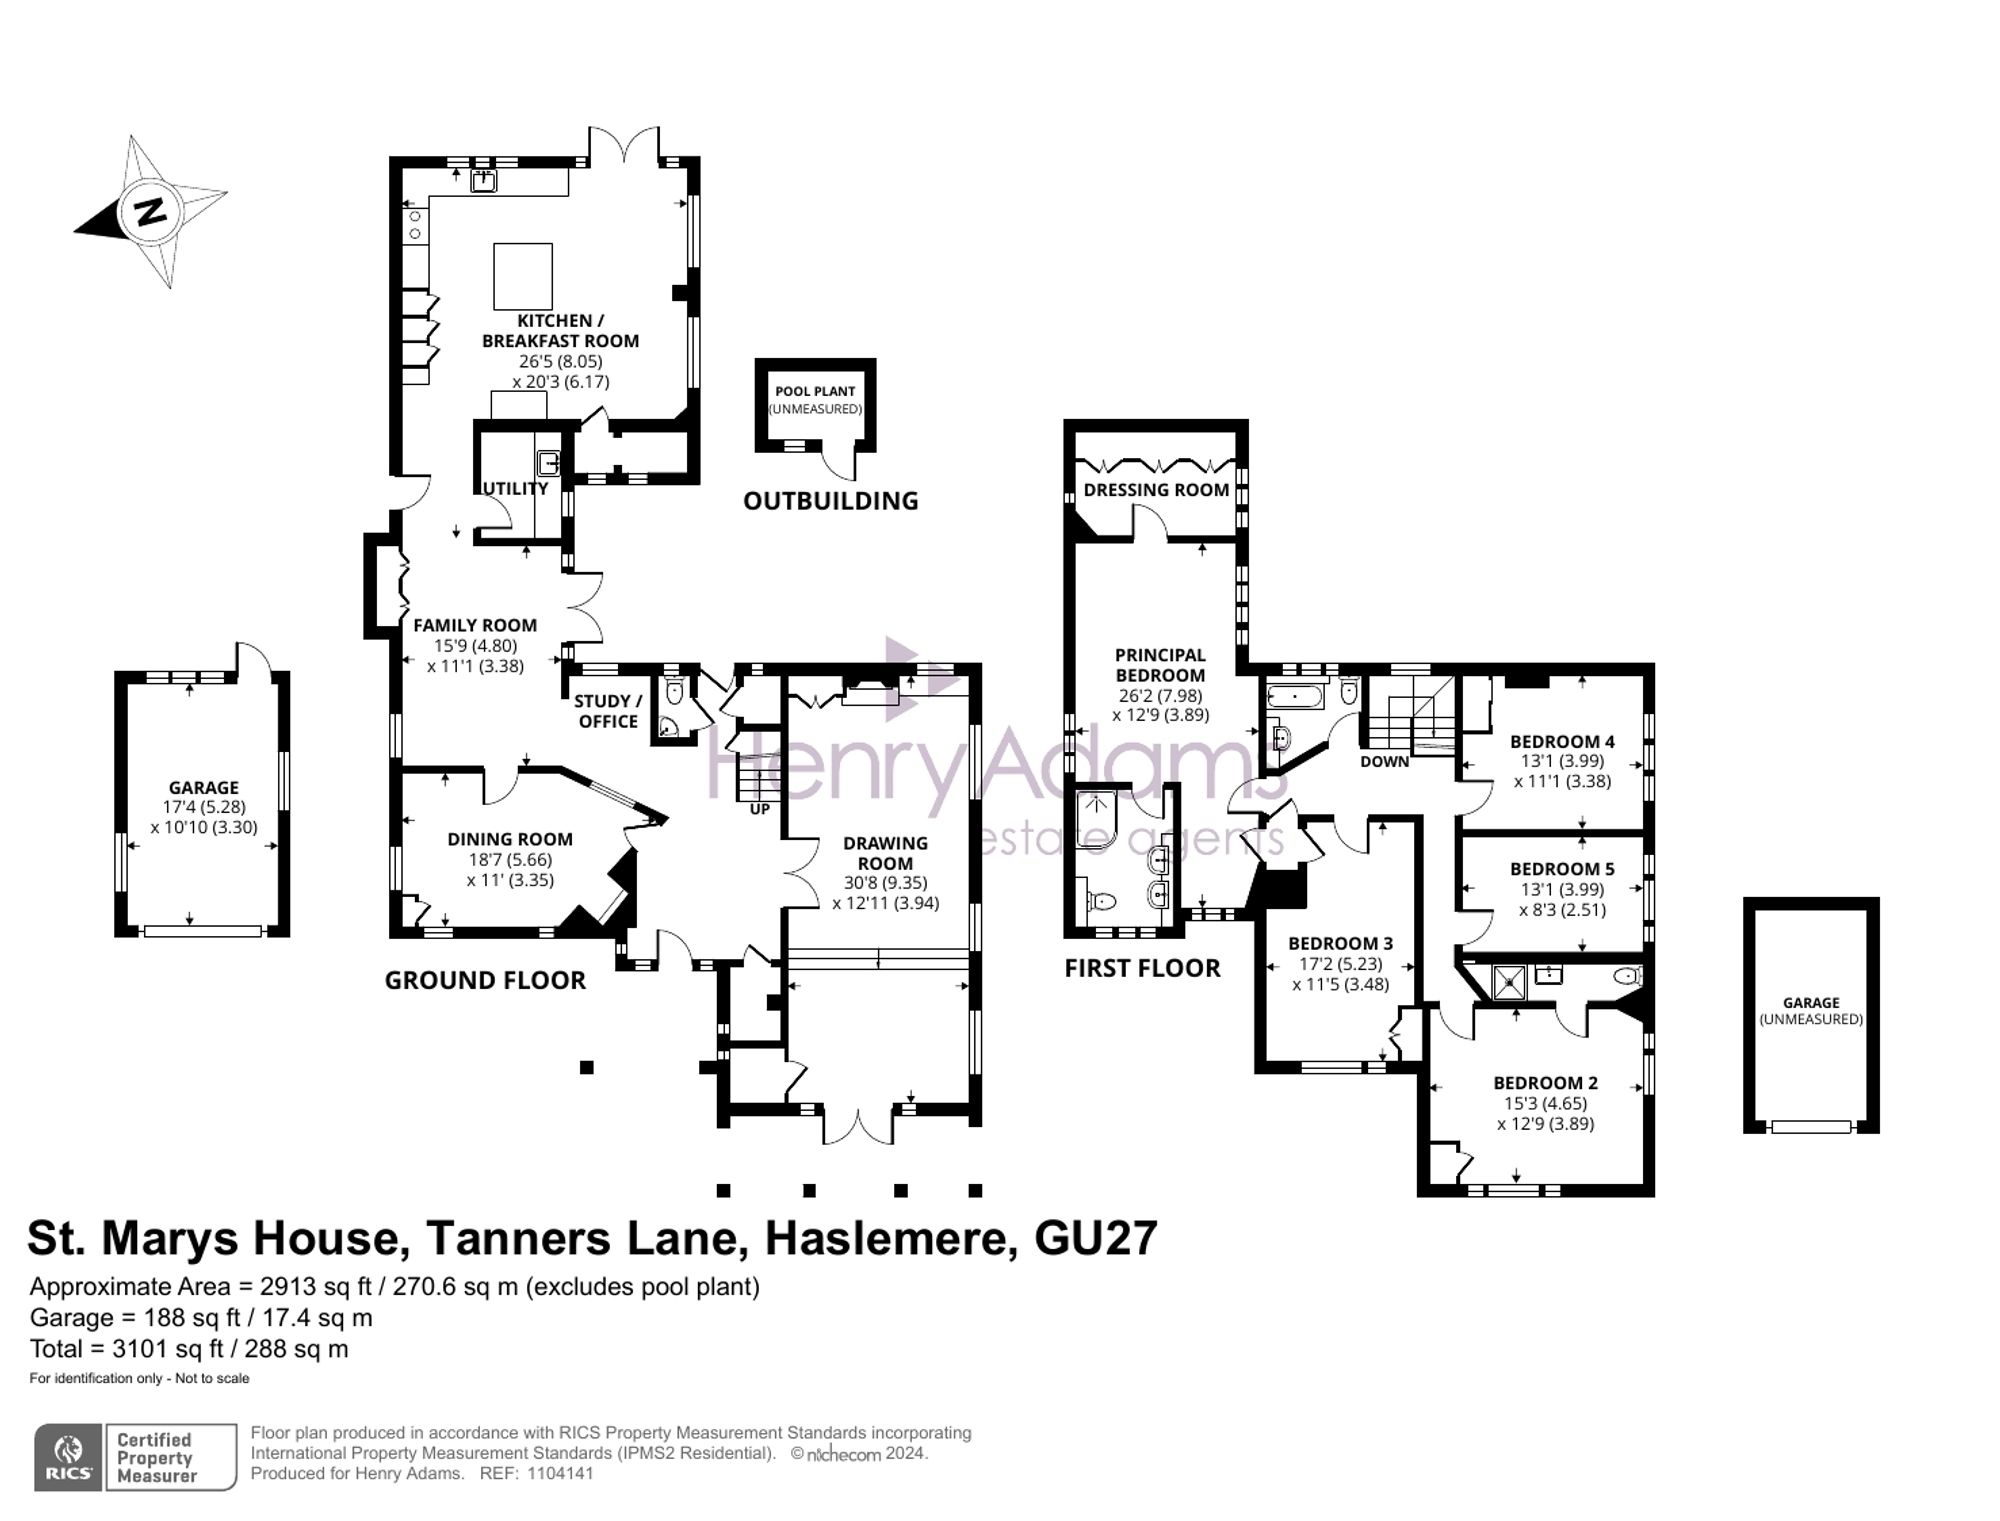 Tanners Lane, Haslemere, GU27 Floor Plans